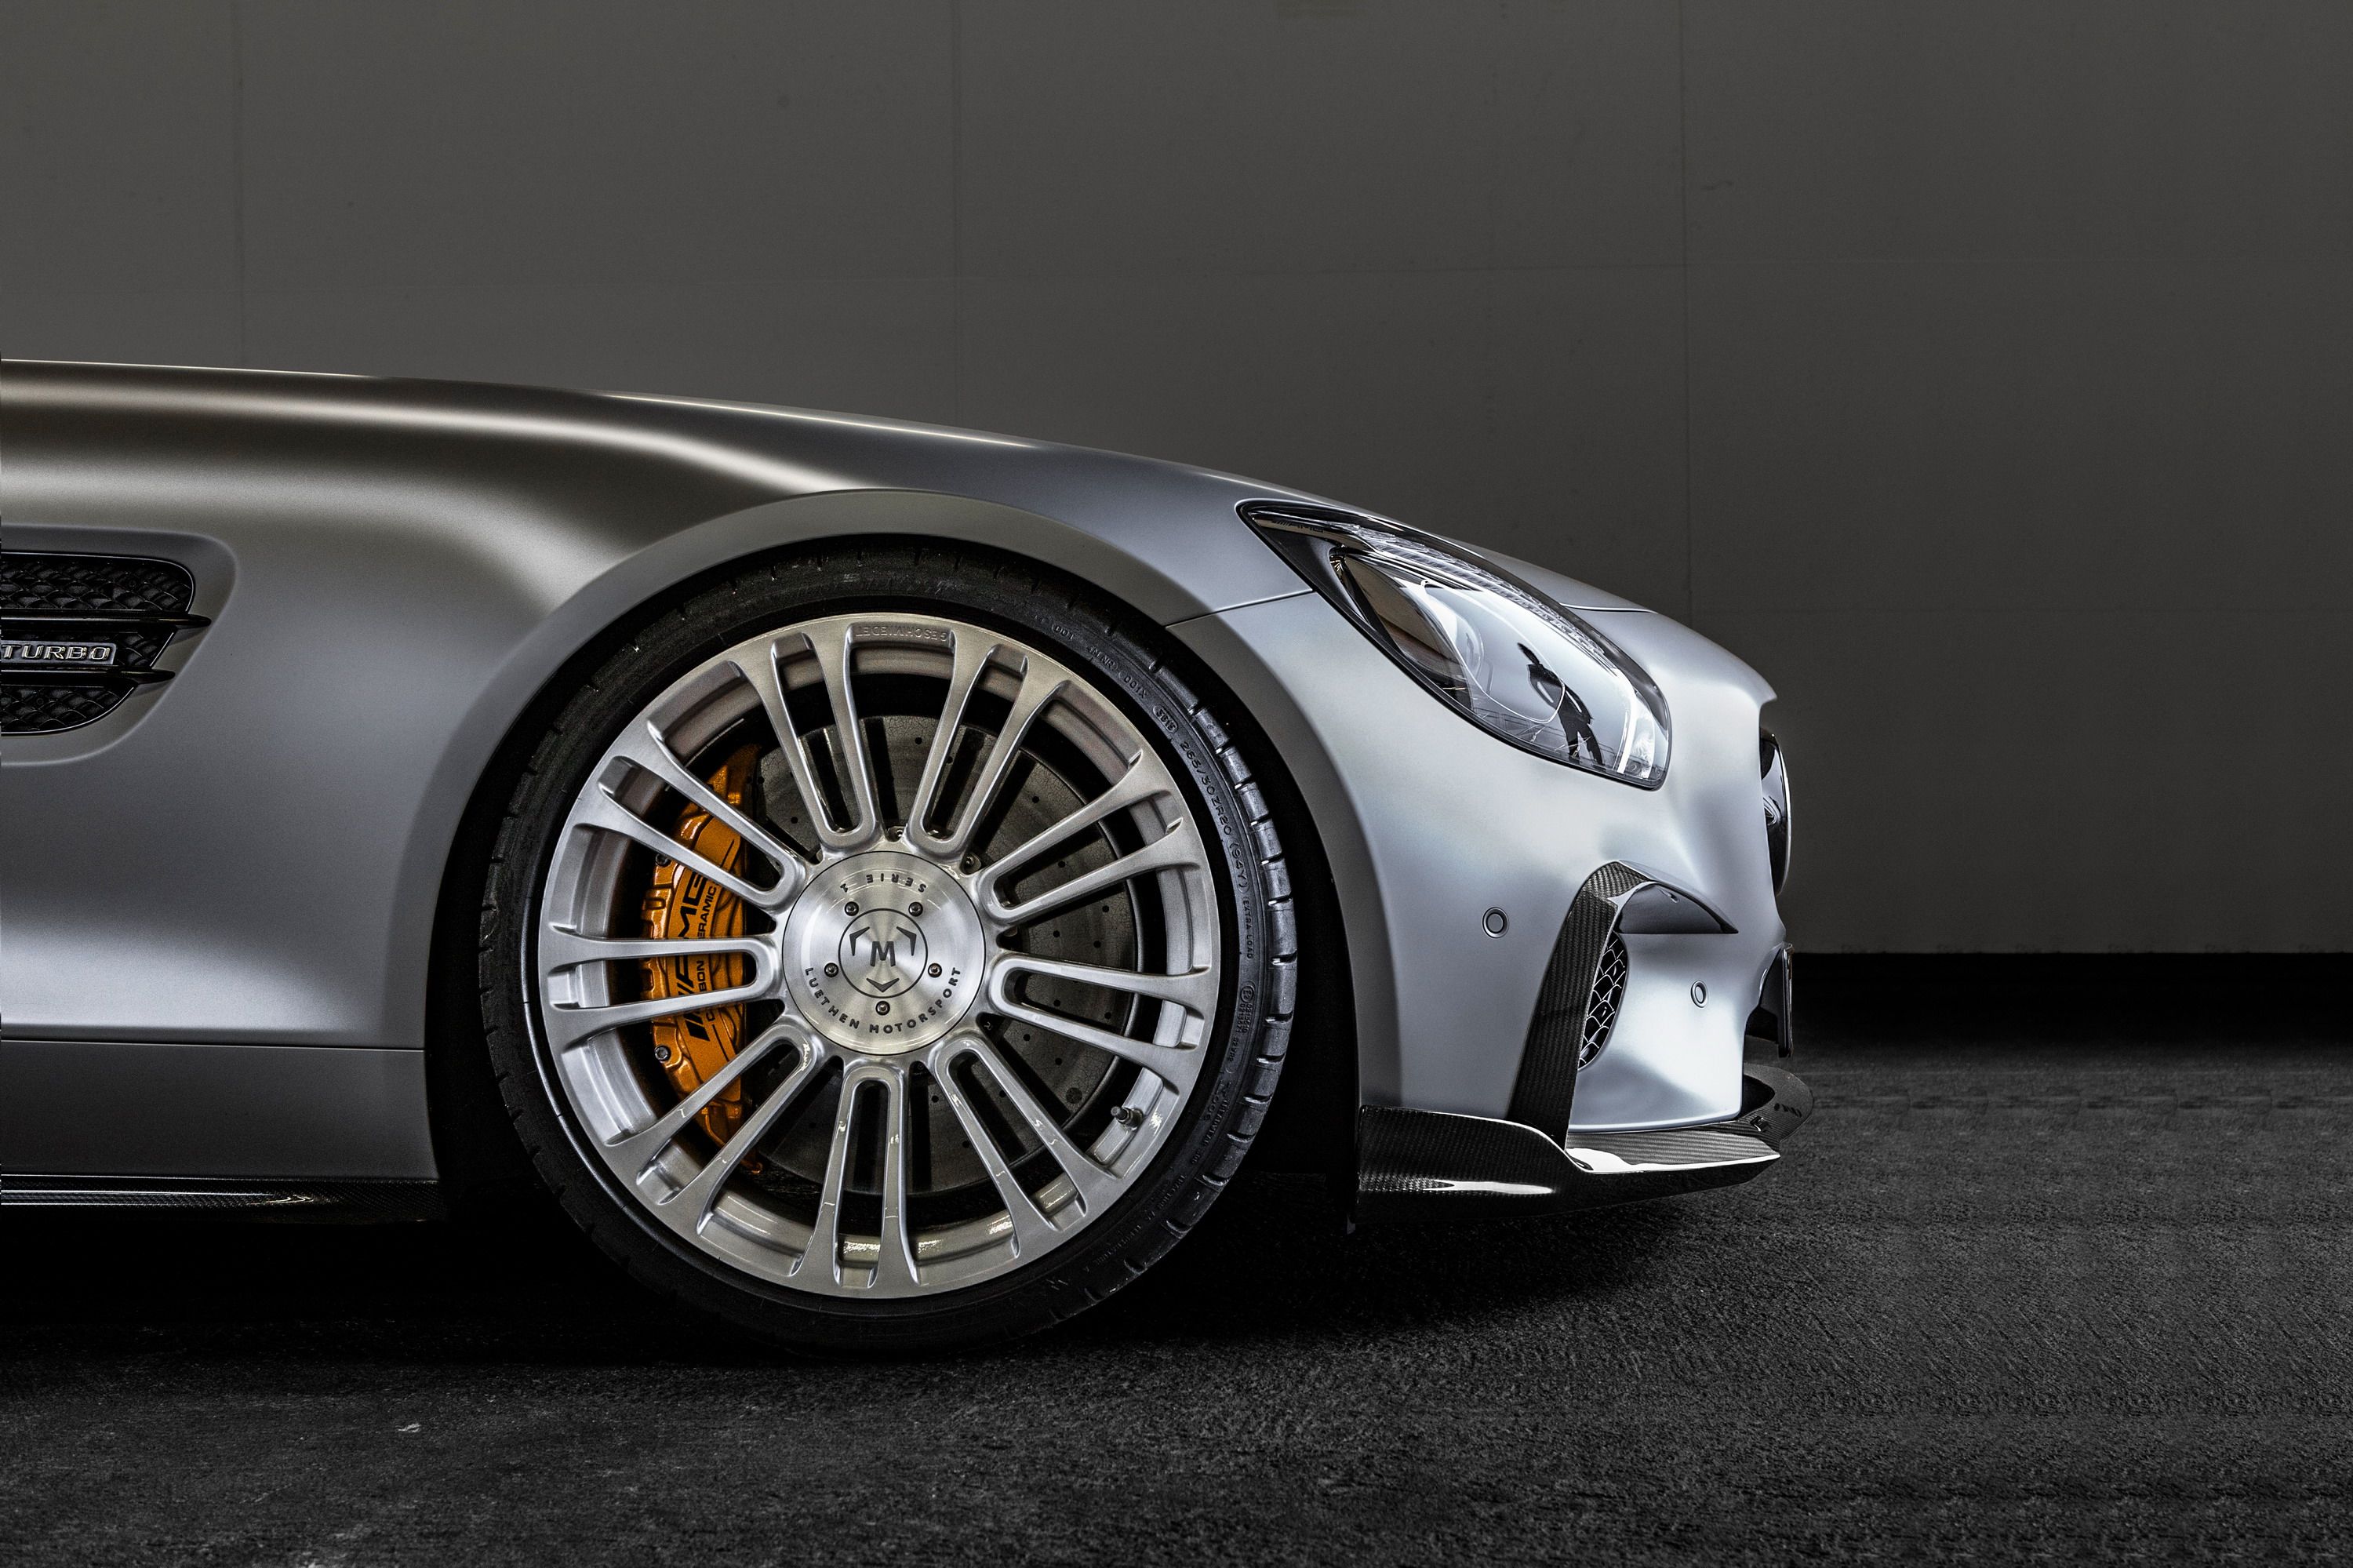 2016 Mercedes-AMG GT by Luethen Motorsport